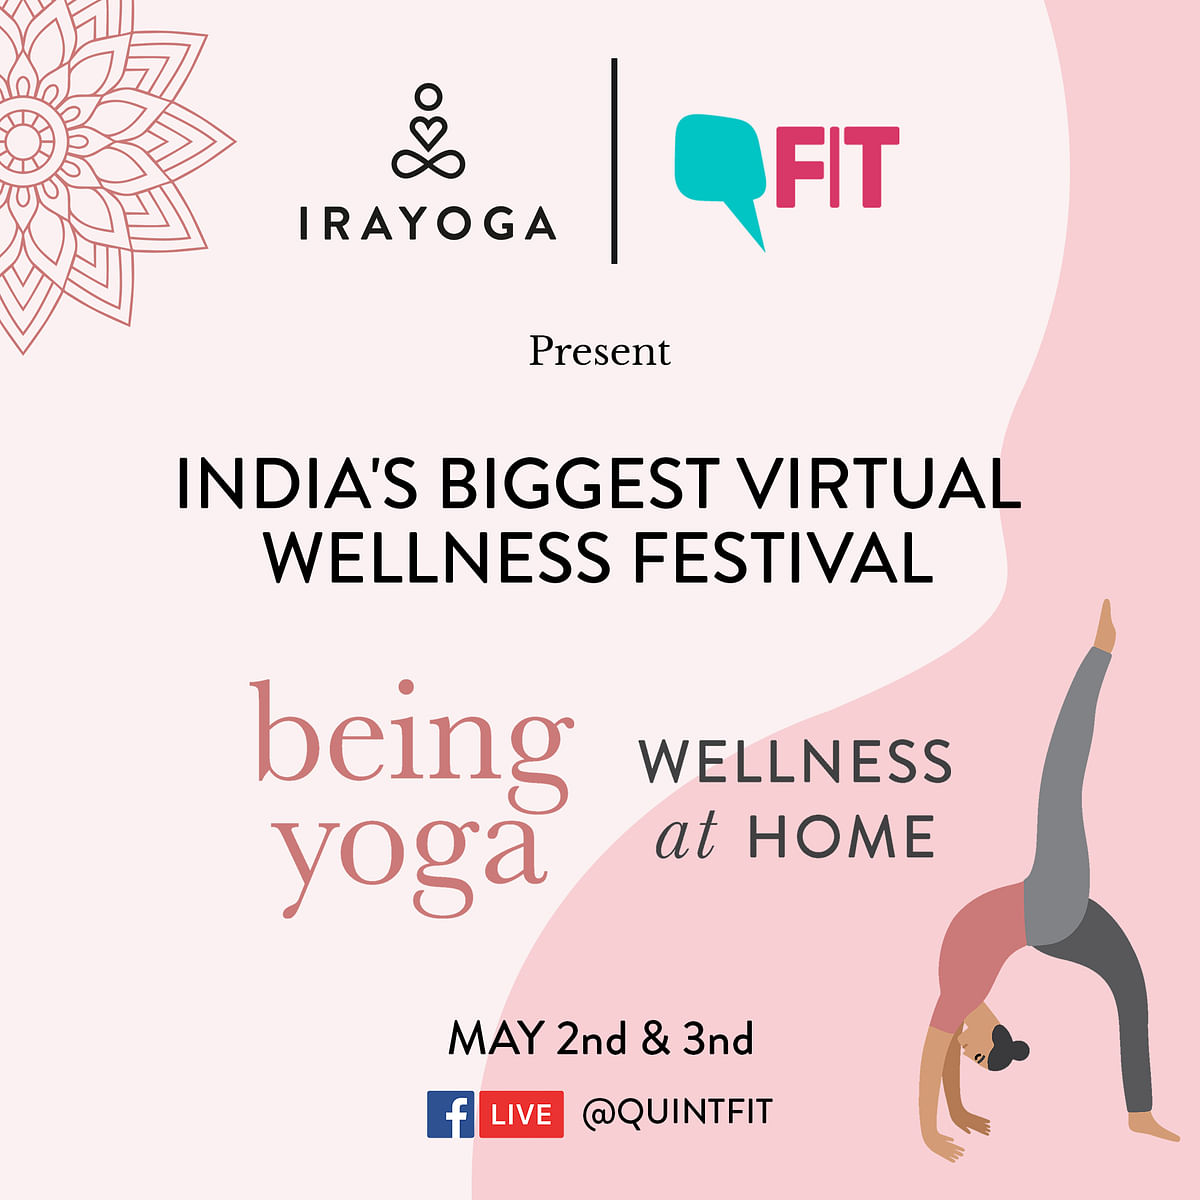 FIT & Ira Yoga Bring You India's Biggest Virtual Wellness Festival